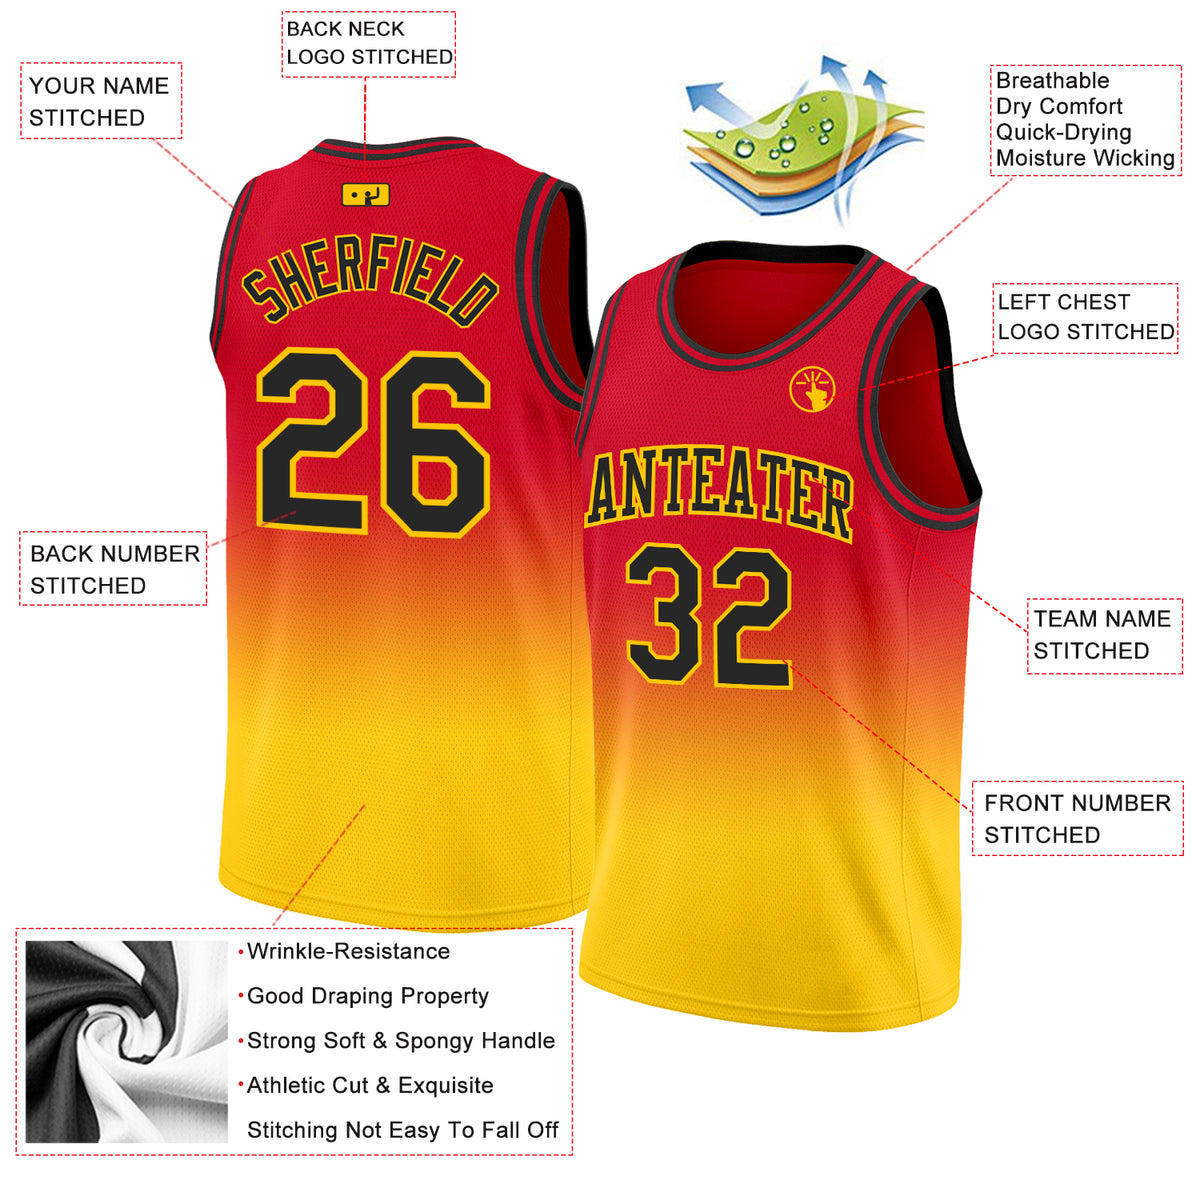 Atlanta Hawks Home Uniform  Sports jersey design, Basketball clothes,  Basketball design